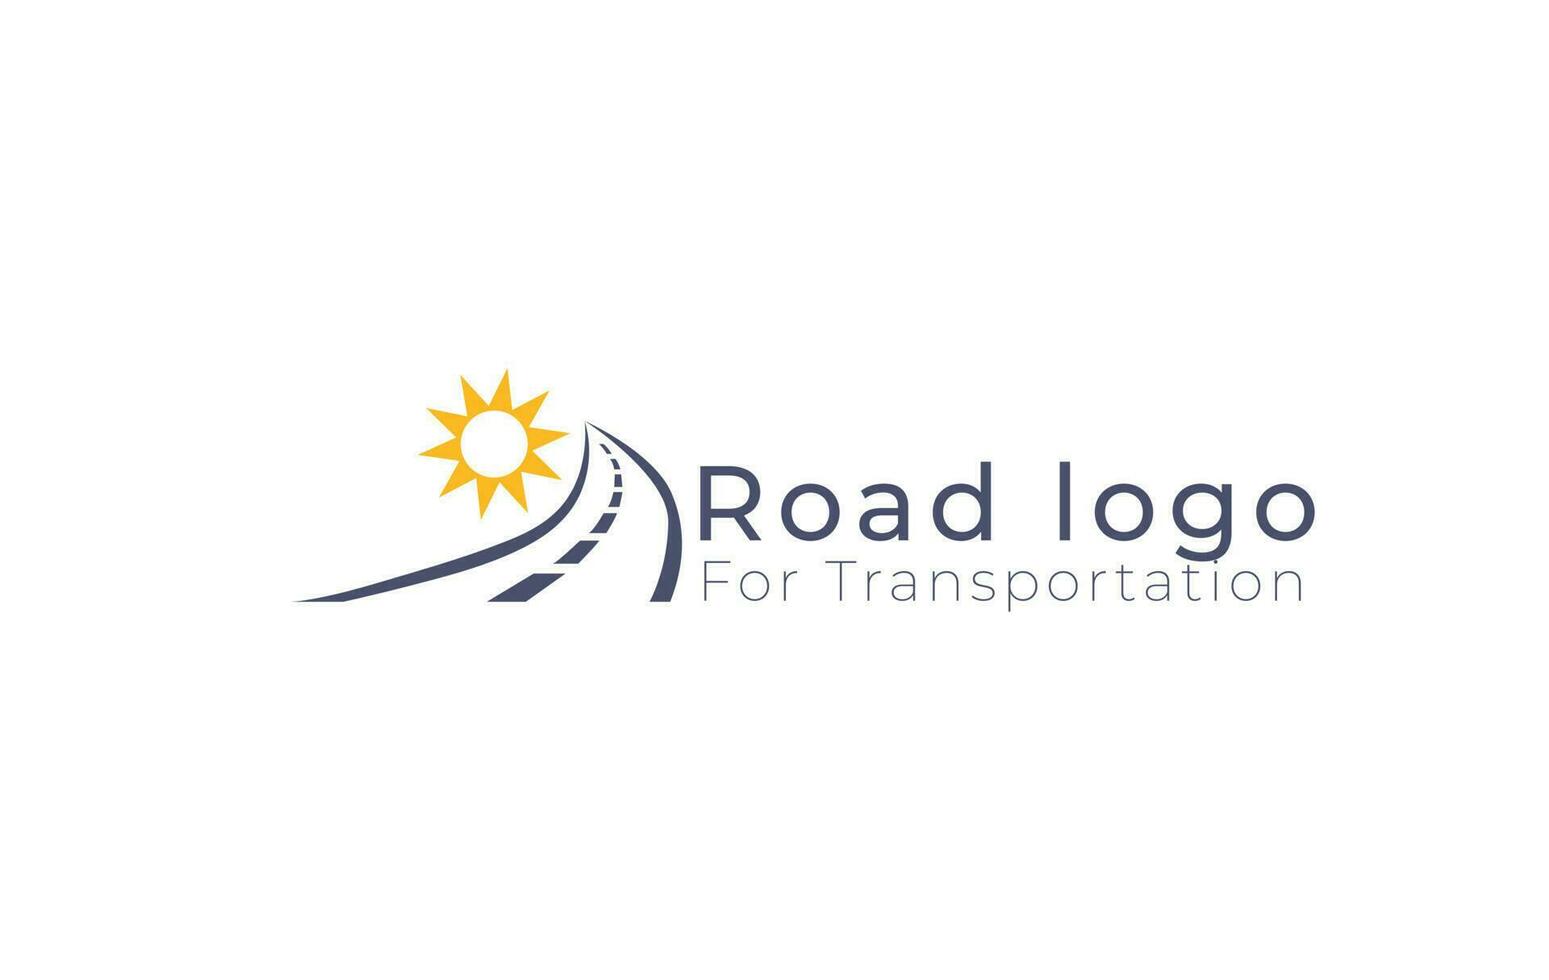 la carretera logo con Dom arriba, abstenerse la carretera logo para transporte, transporte logo, vector eps archivo